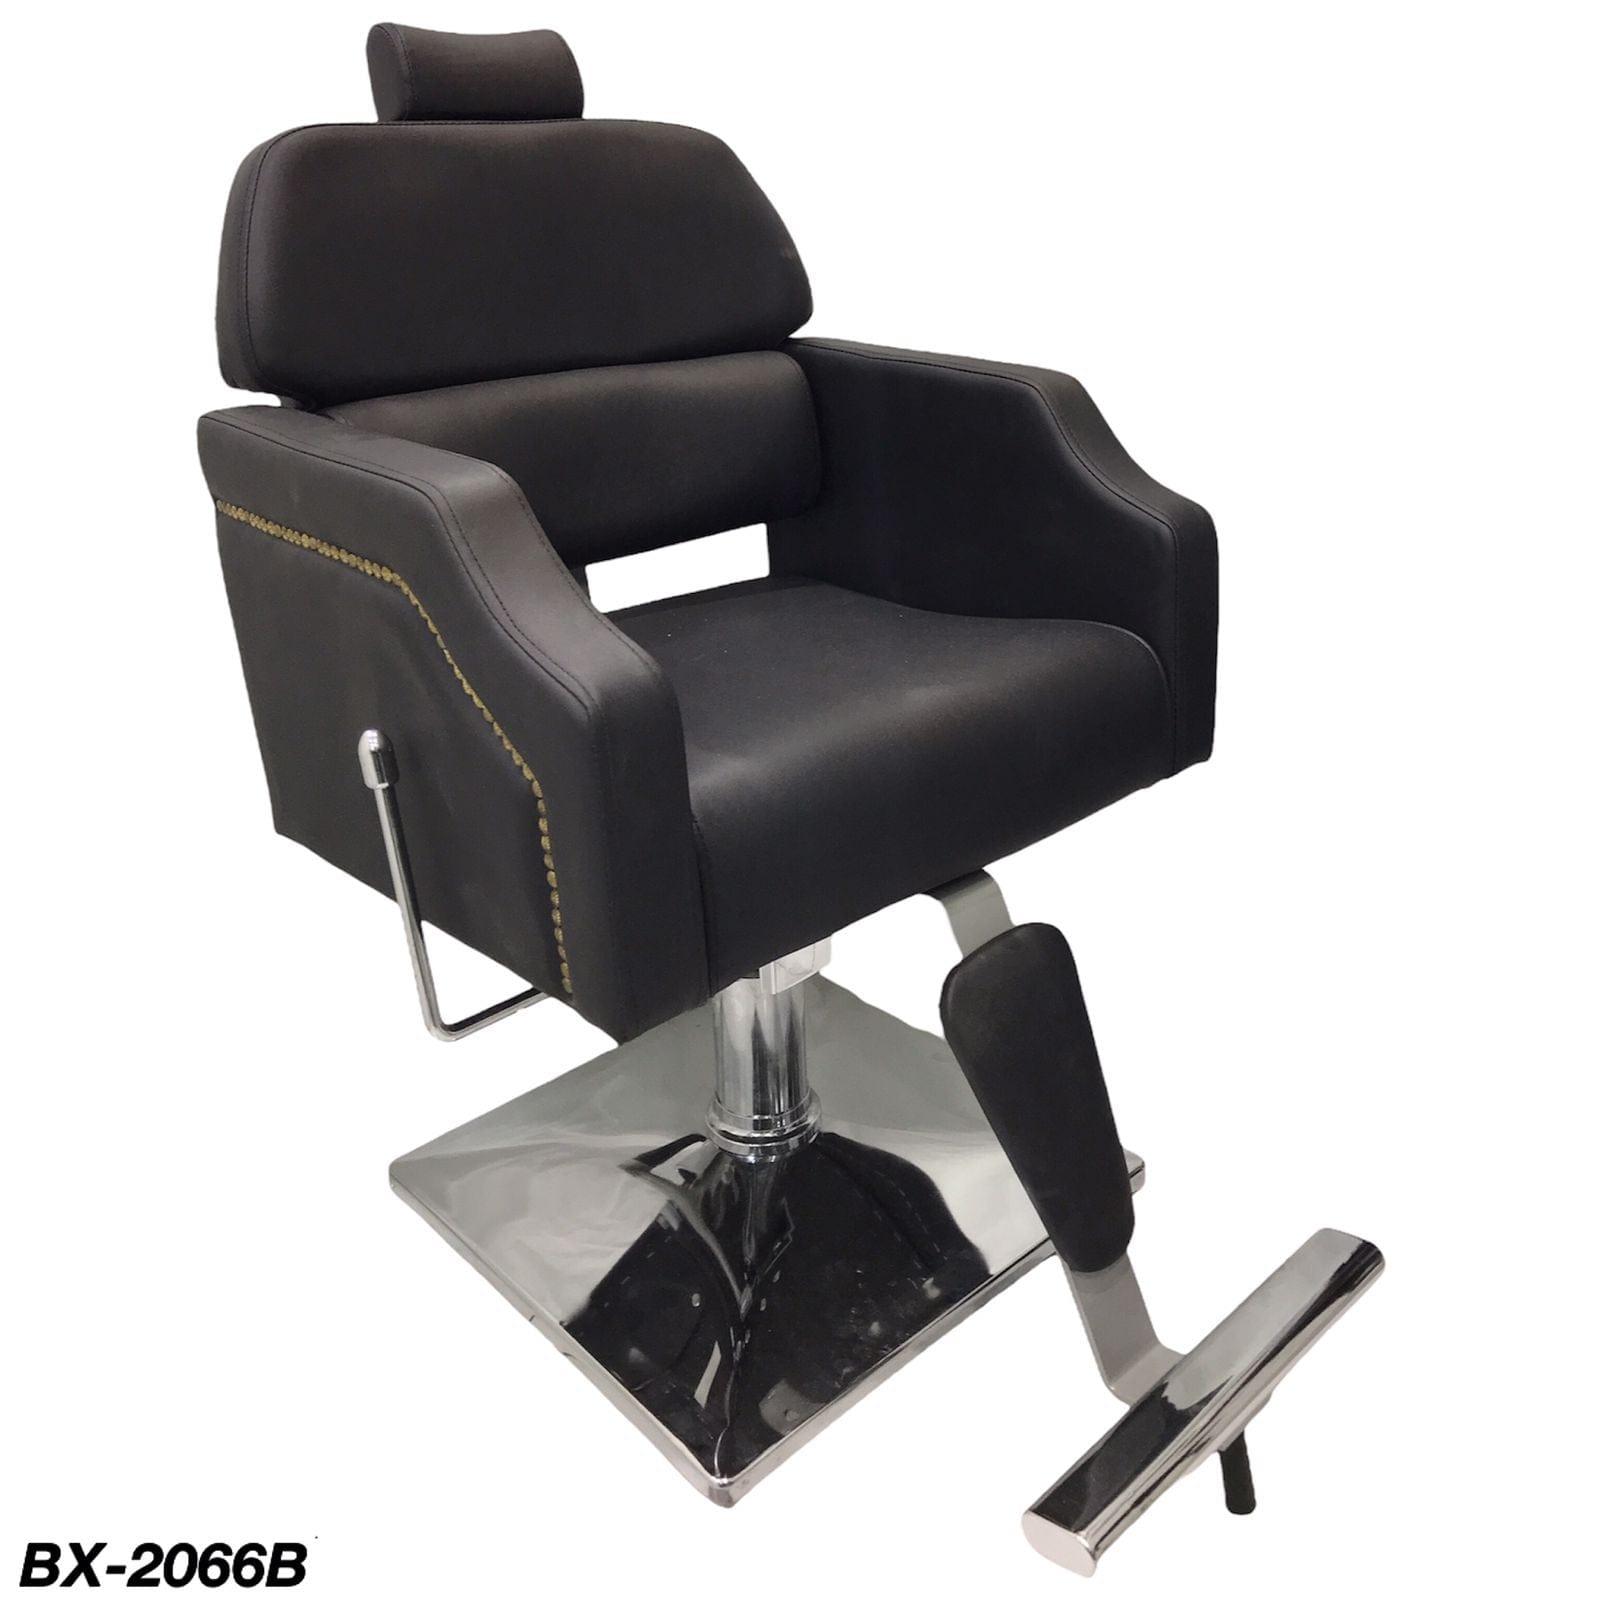 Globaltstar Professional Ladies Styling Chair BX-2066B